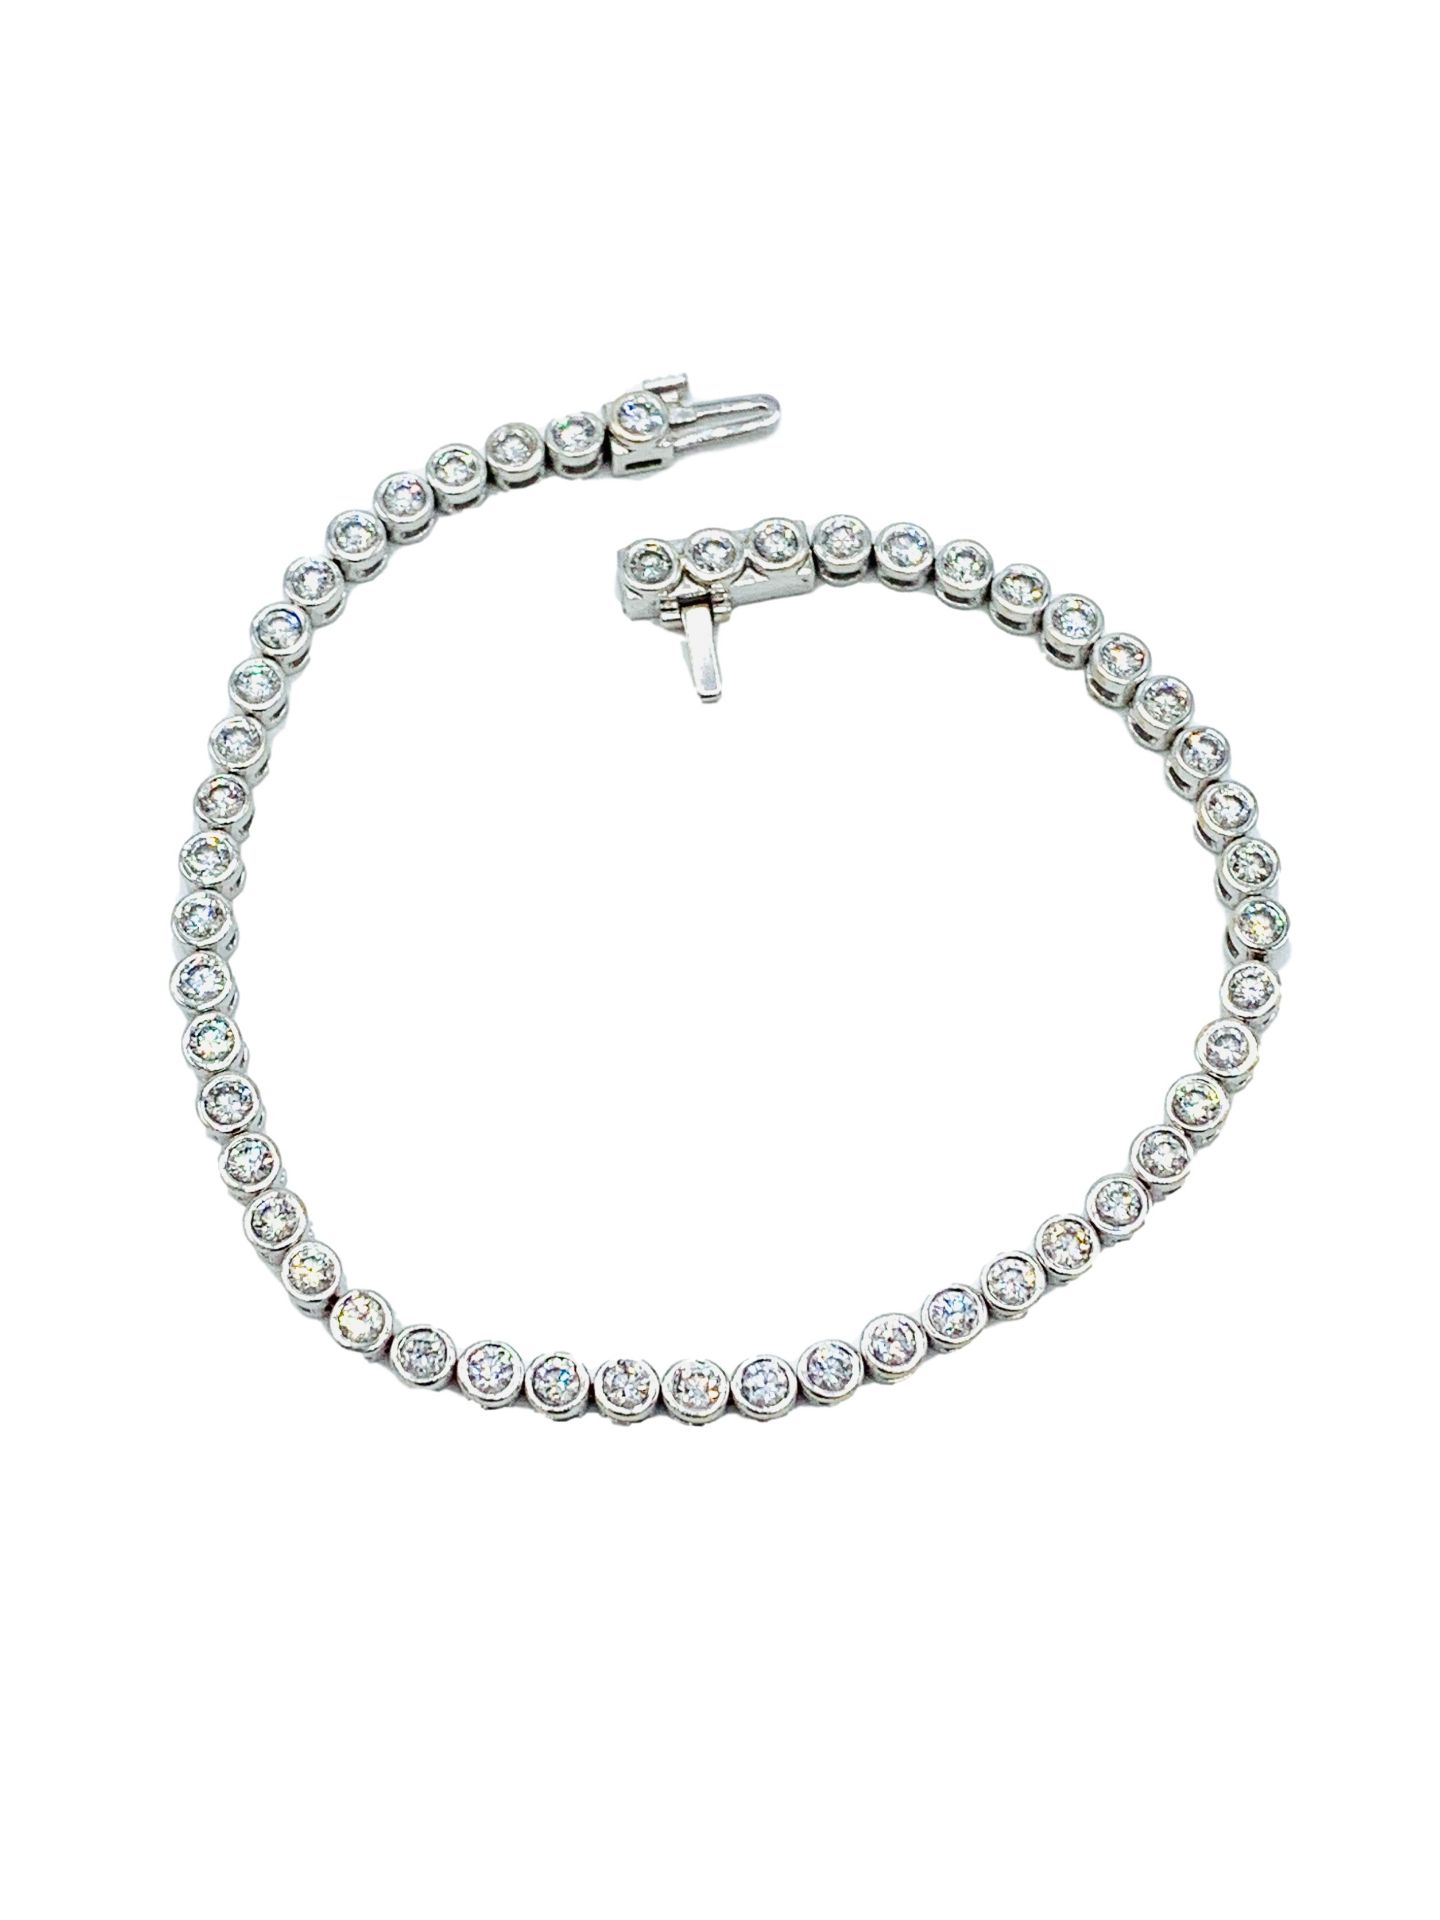 18ct white gold and diamond tennis bracelet. - Image 2 of 7